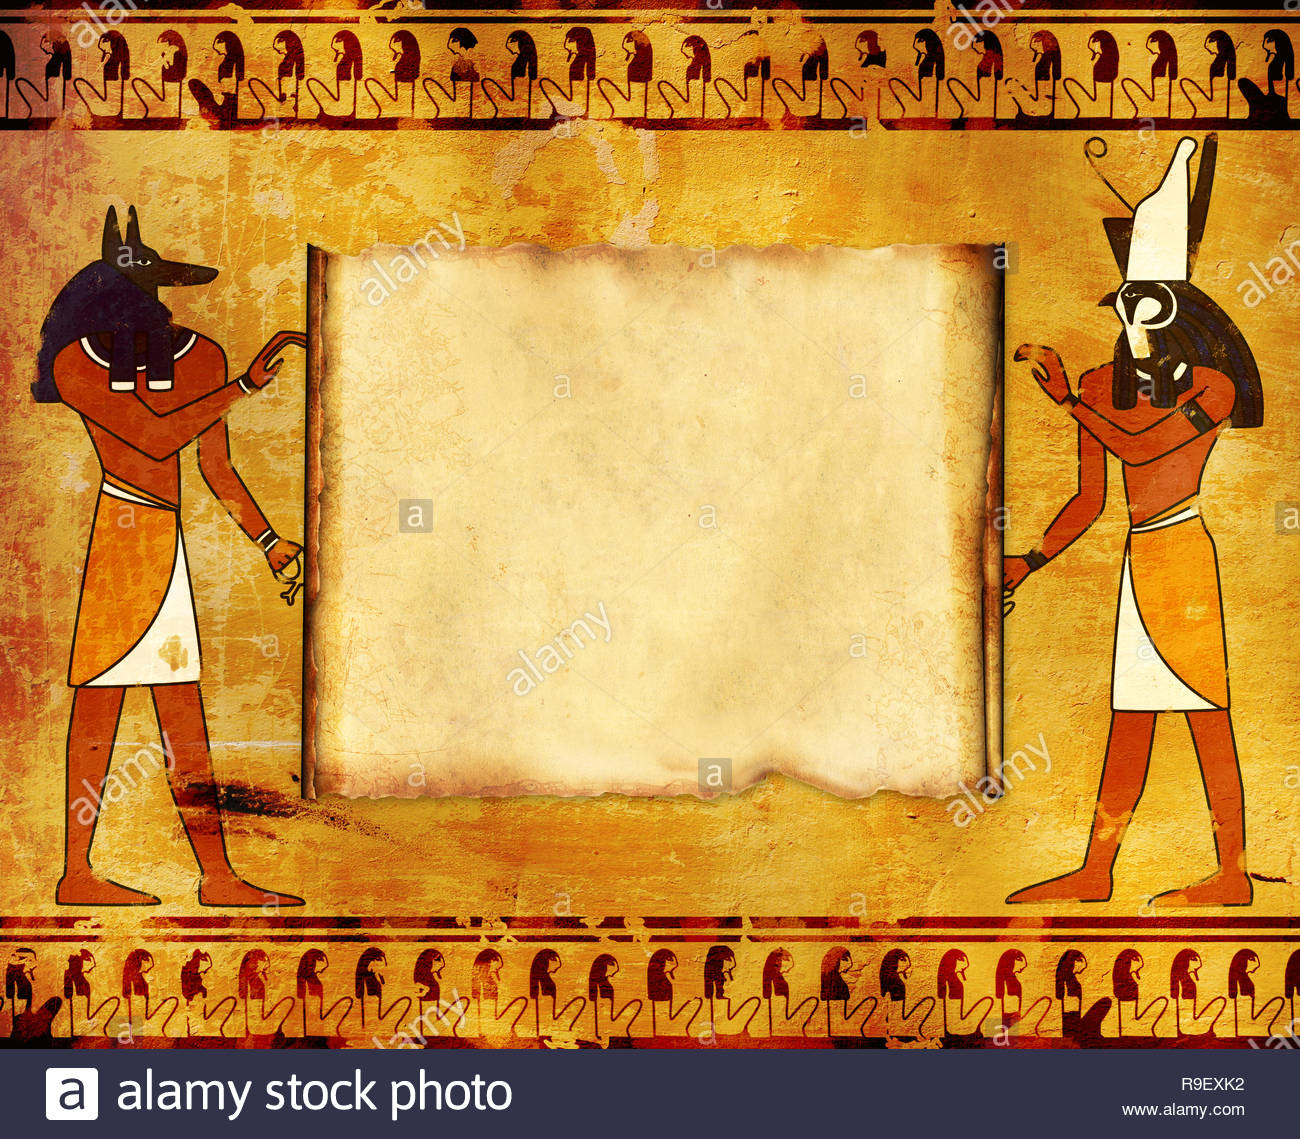 Background With Egyptian Gods Image Anubis And Horus Stock